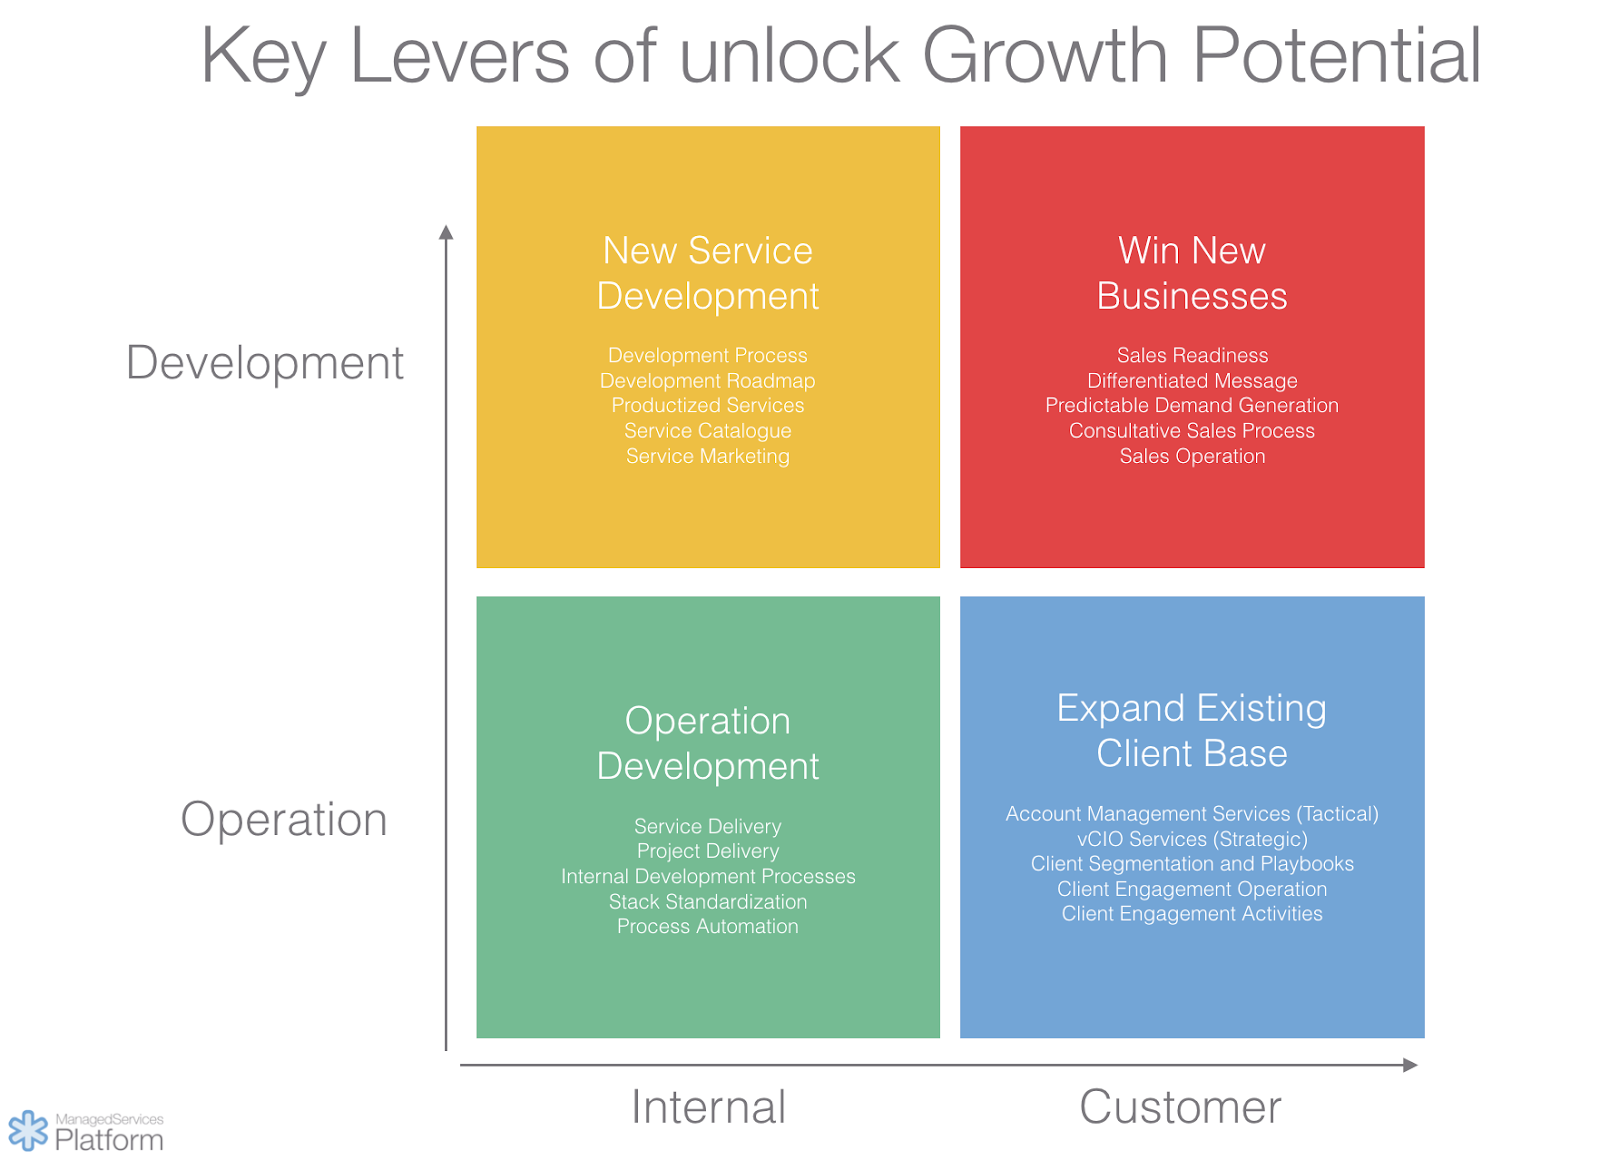 Key level of unlock MSP growth potential